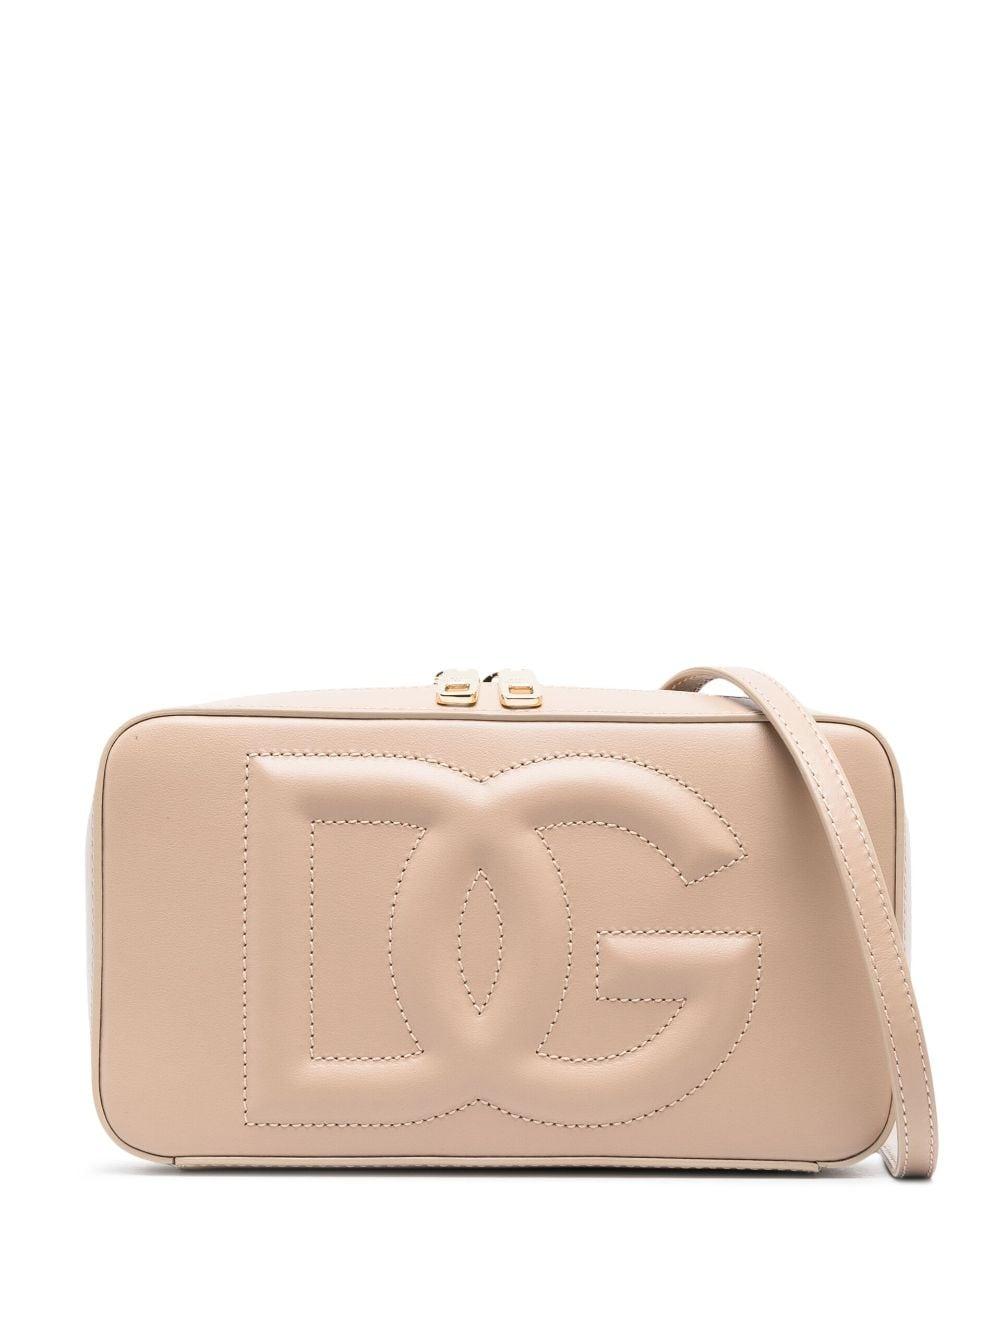 Dolce & Gabbana Small Dg Logo Camera Bag in Natural